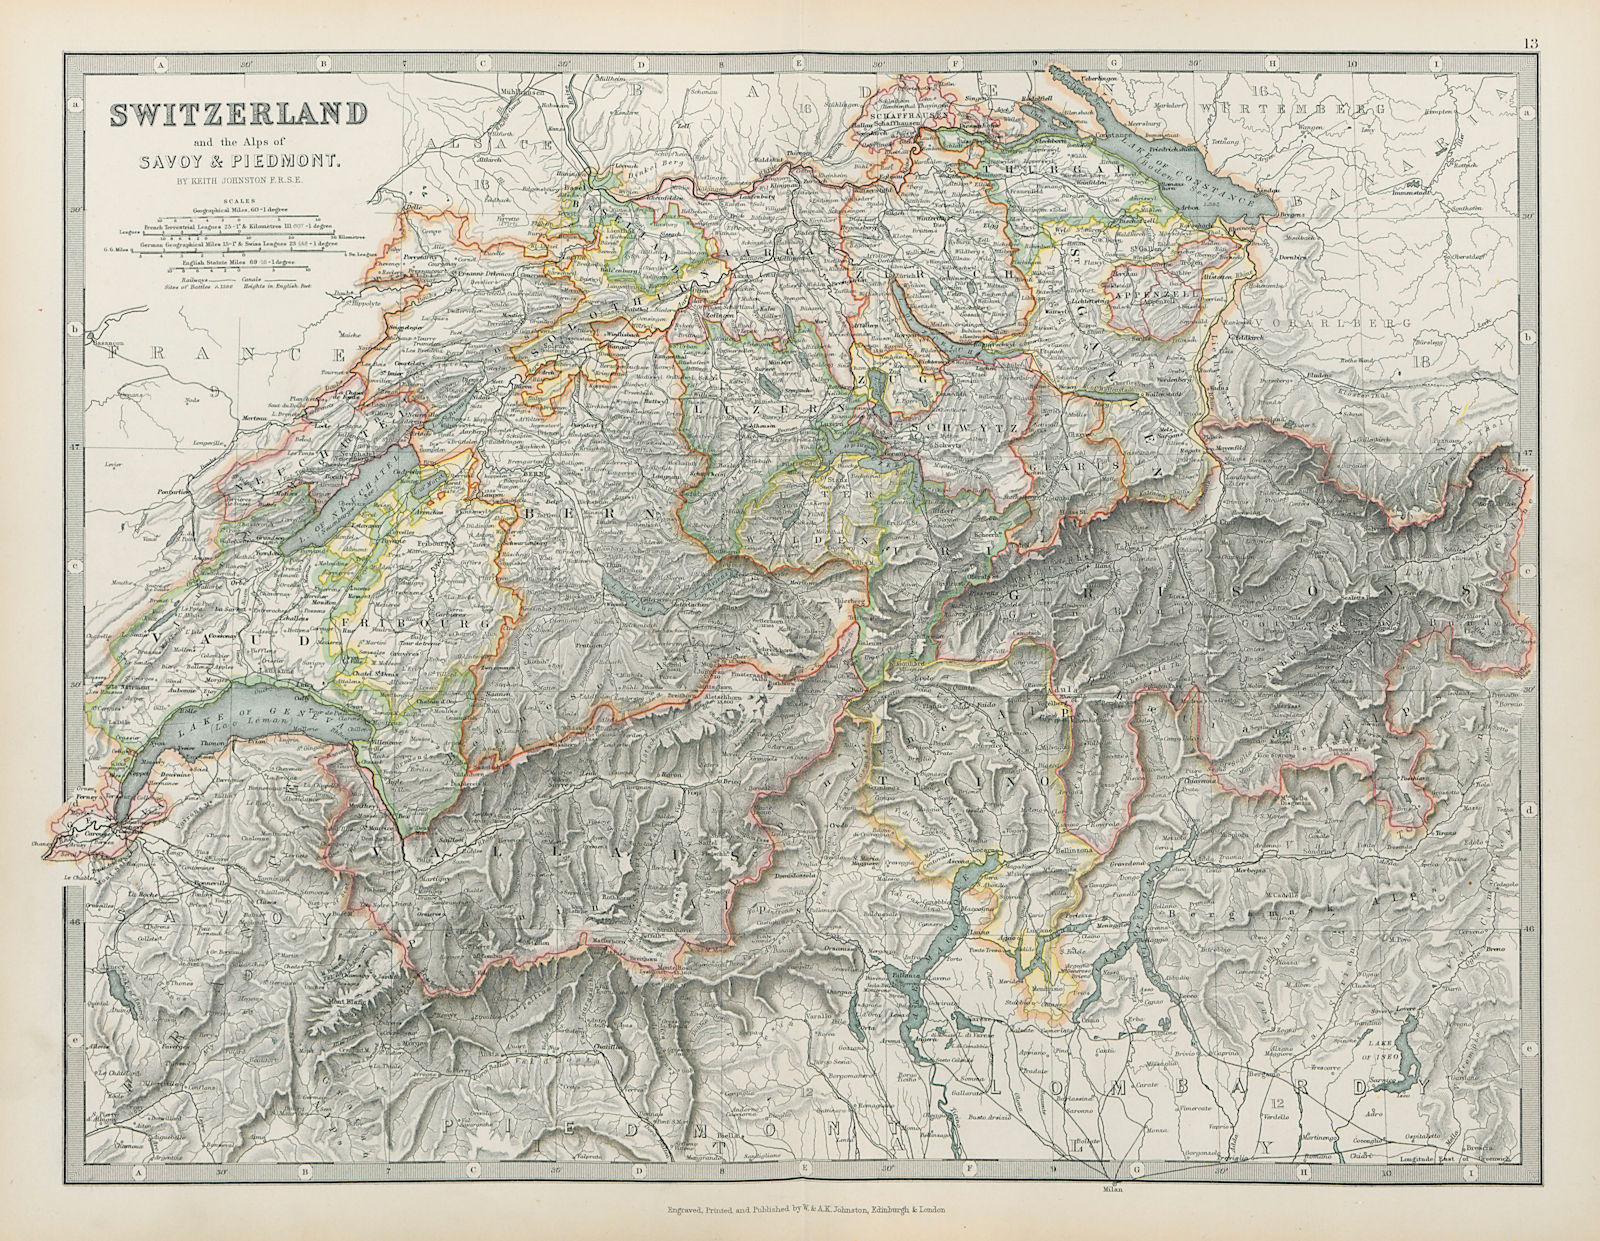 ALPS & SAVOIE Switzerland & the Alps of Savoy & Piedmont JOHNSTON 1901 old map